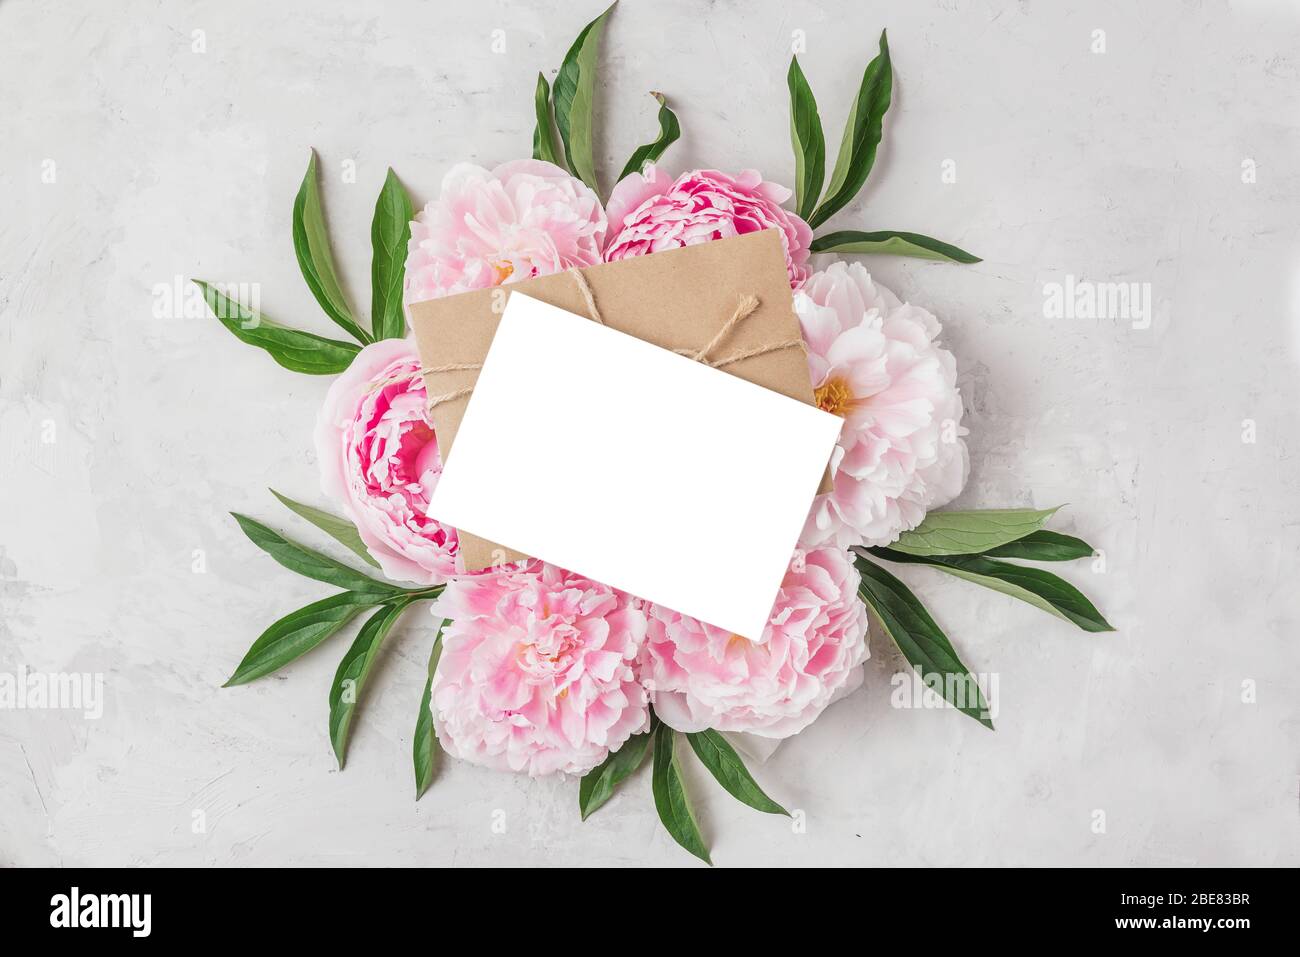 Hipster wedding invitation card fotografías e imágenes de alta resolución -  Alamy